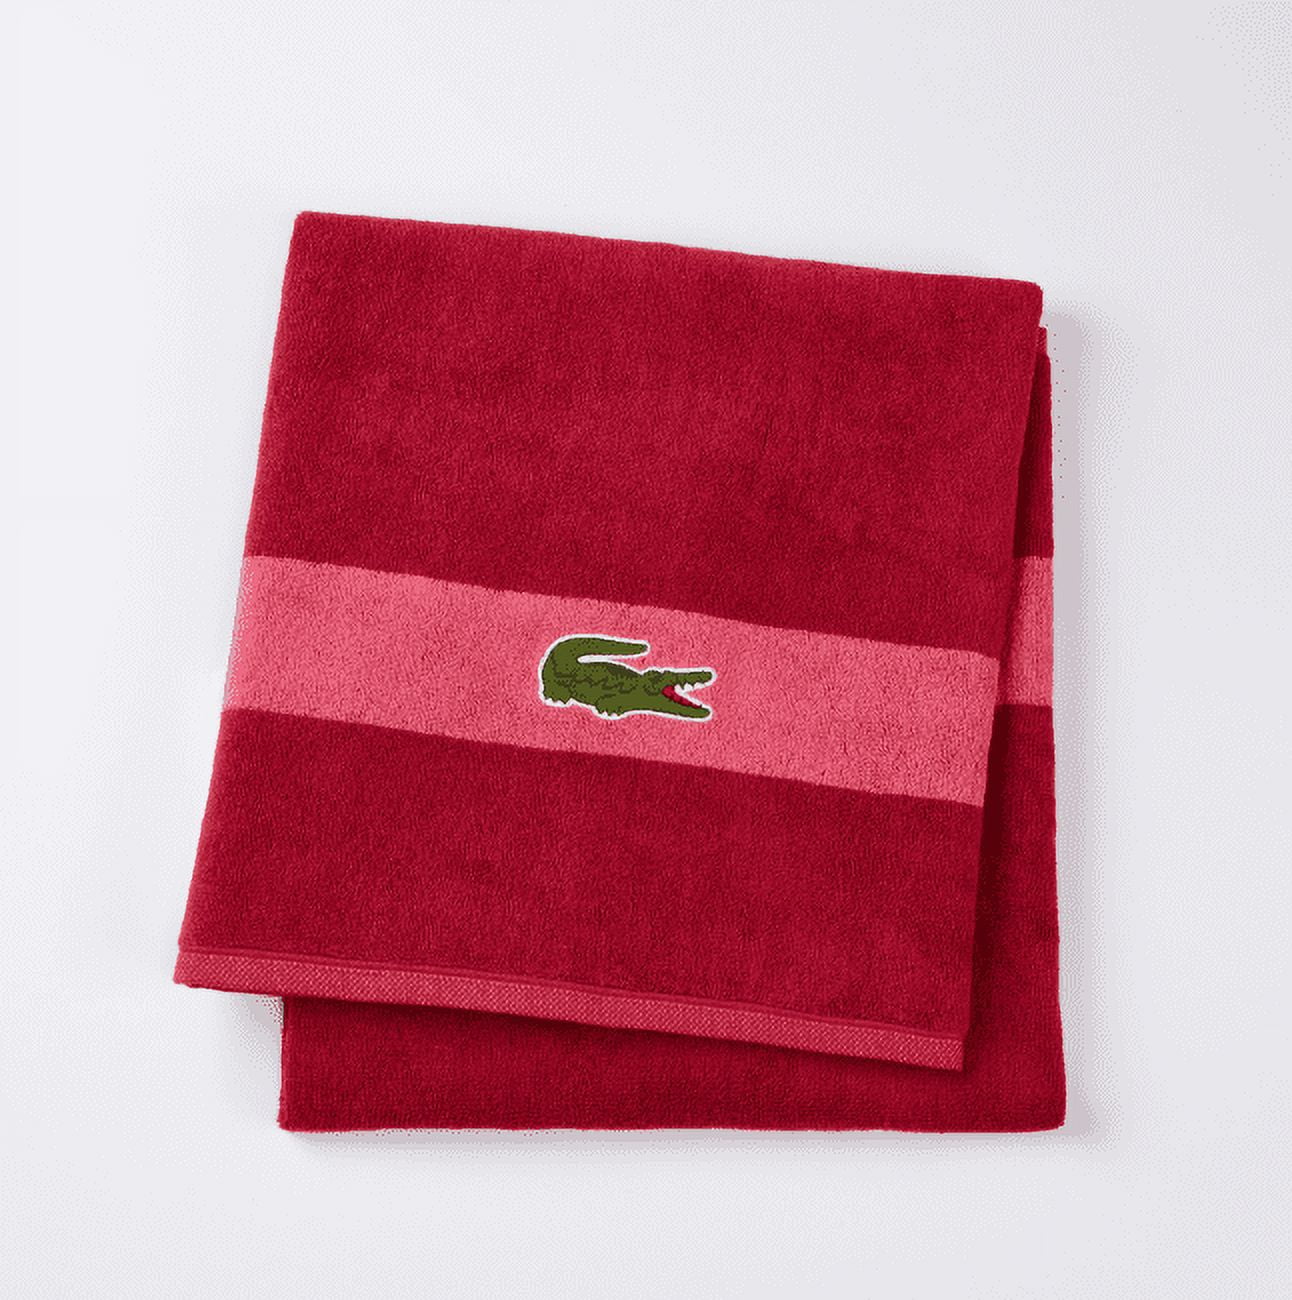 【 Lacoste】 Bath Towel 100% Cotton 30 x 52 Charcoal Gray Big Crocodile  Logo 🐊